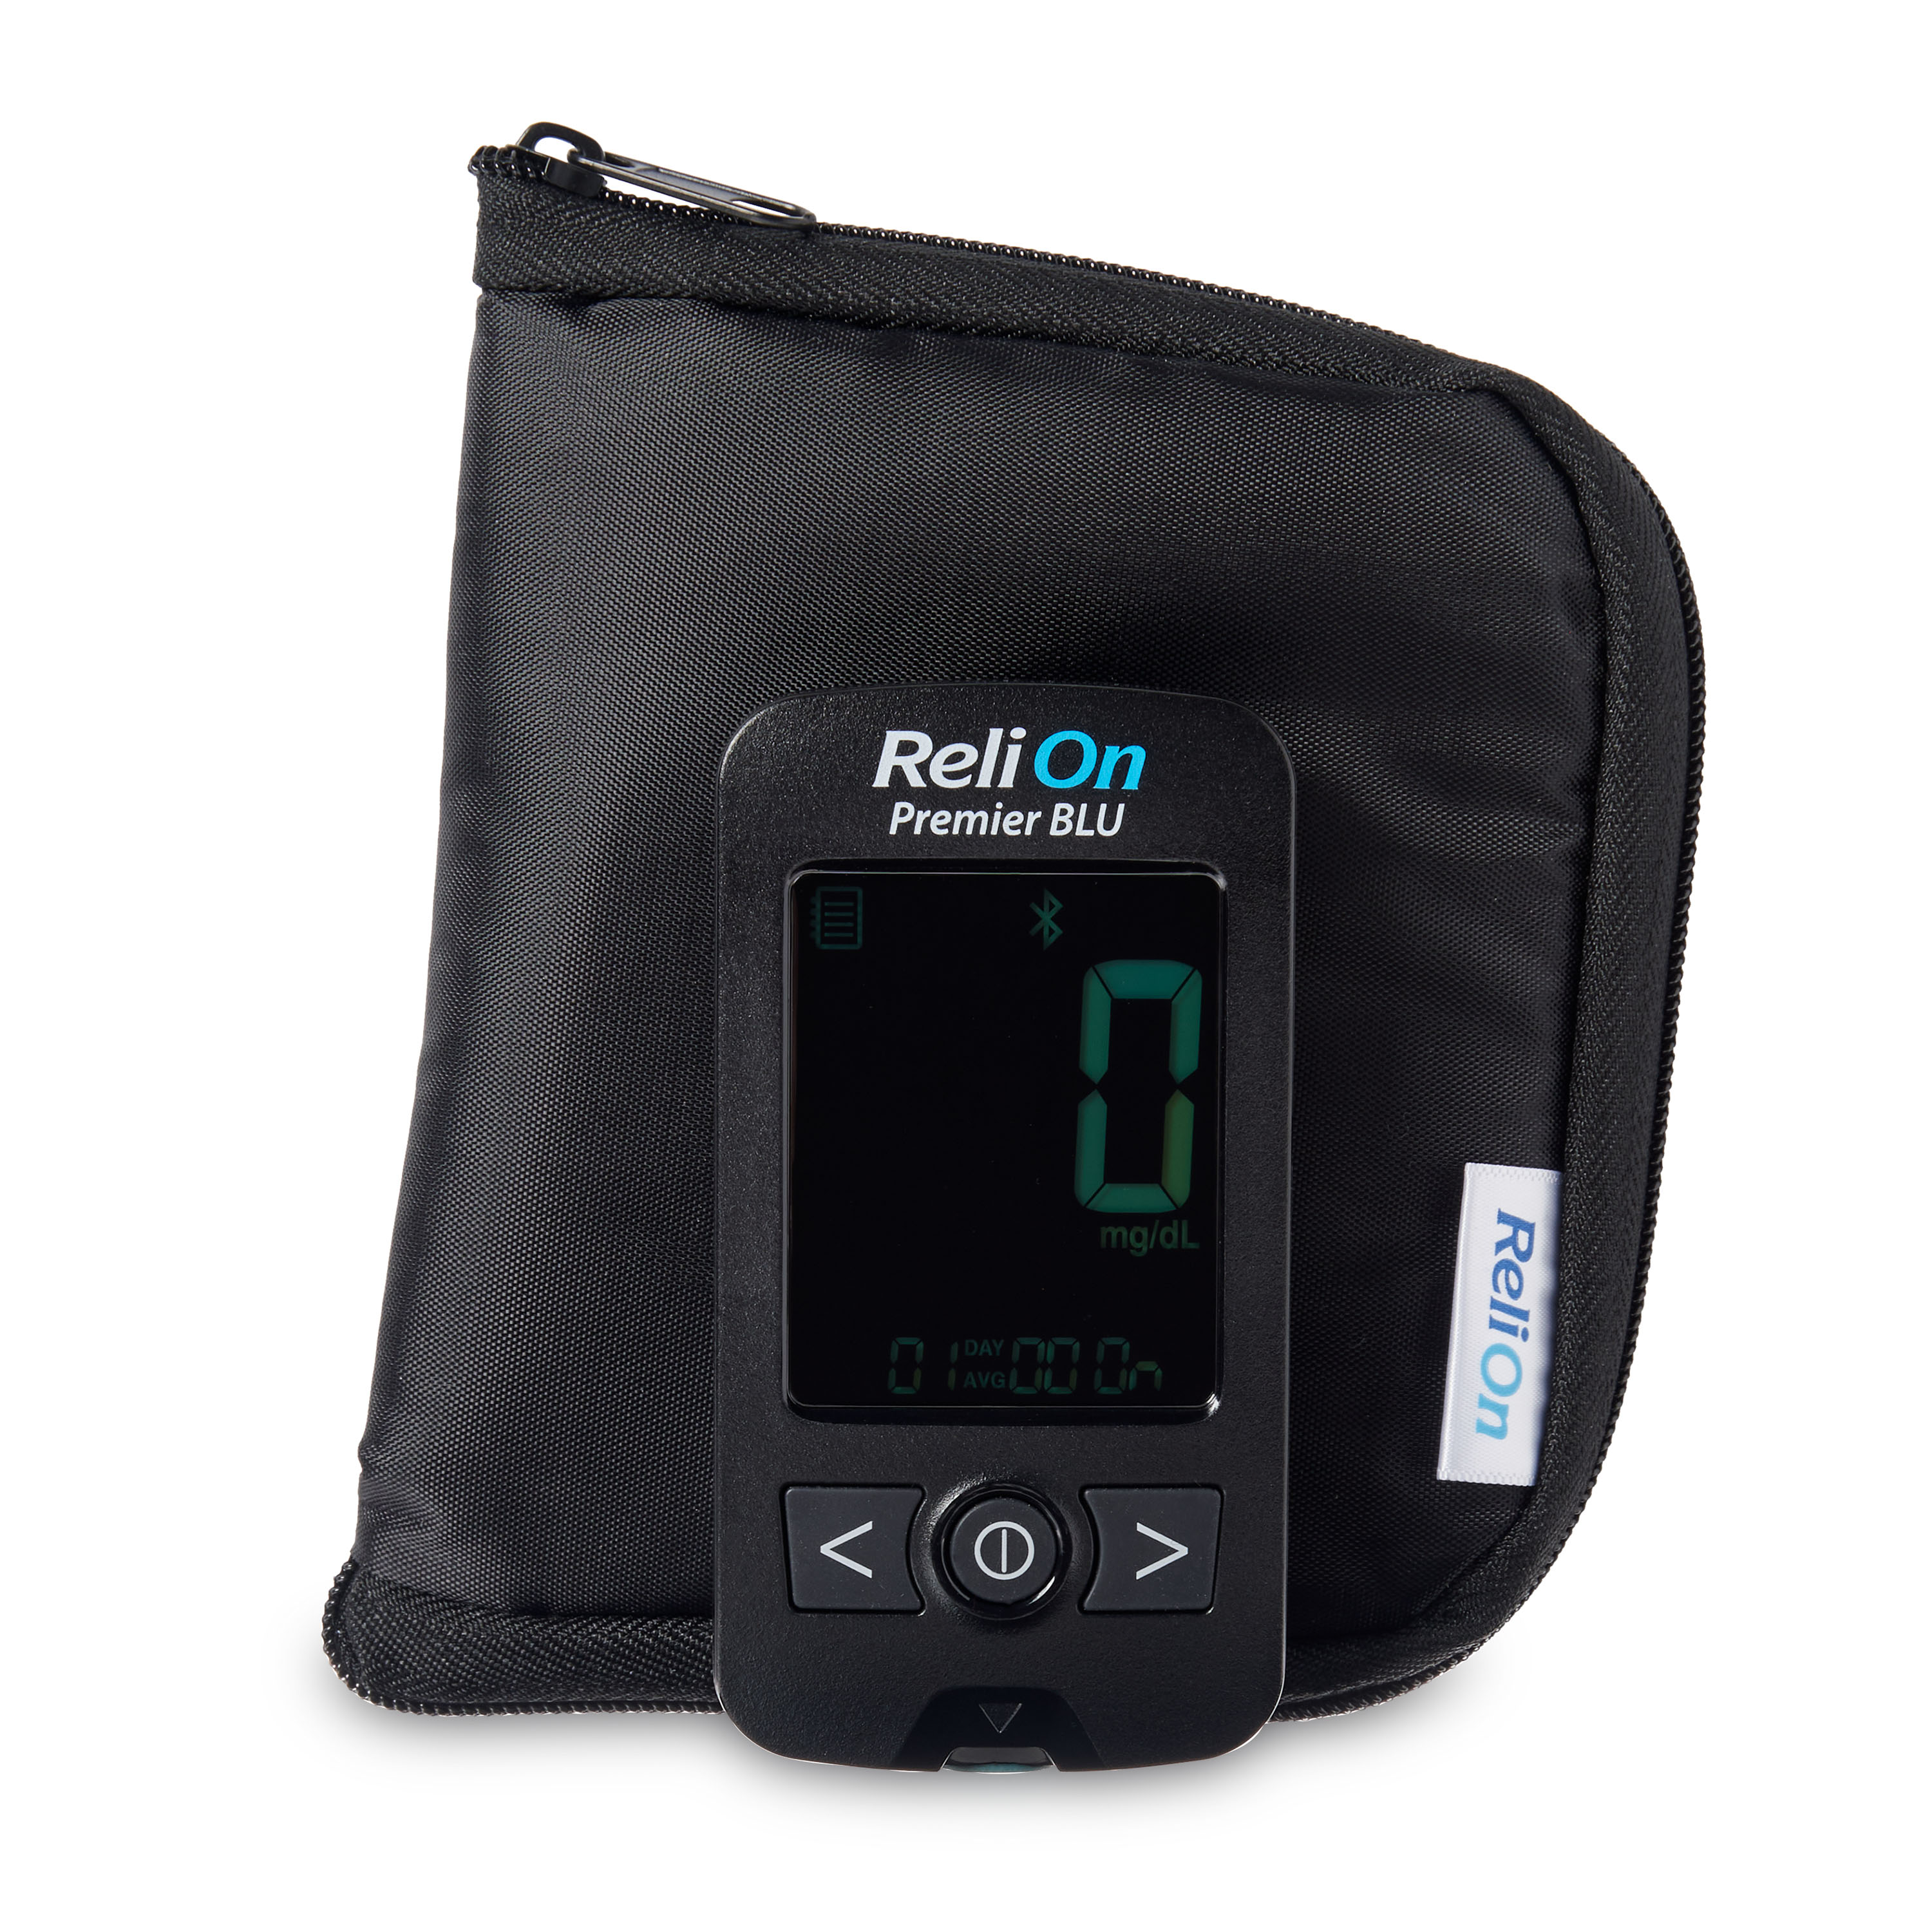 ReliOn Premier BLU Blood Glucose Monitoring System - image 3 of 7